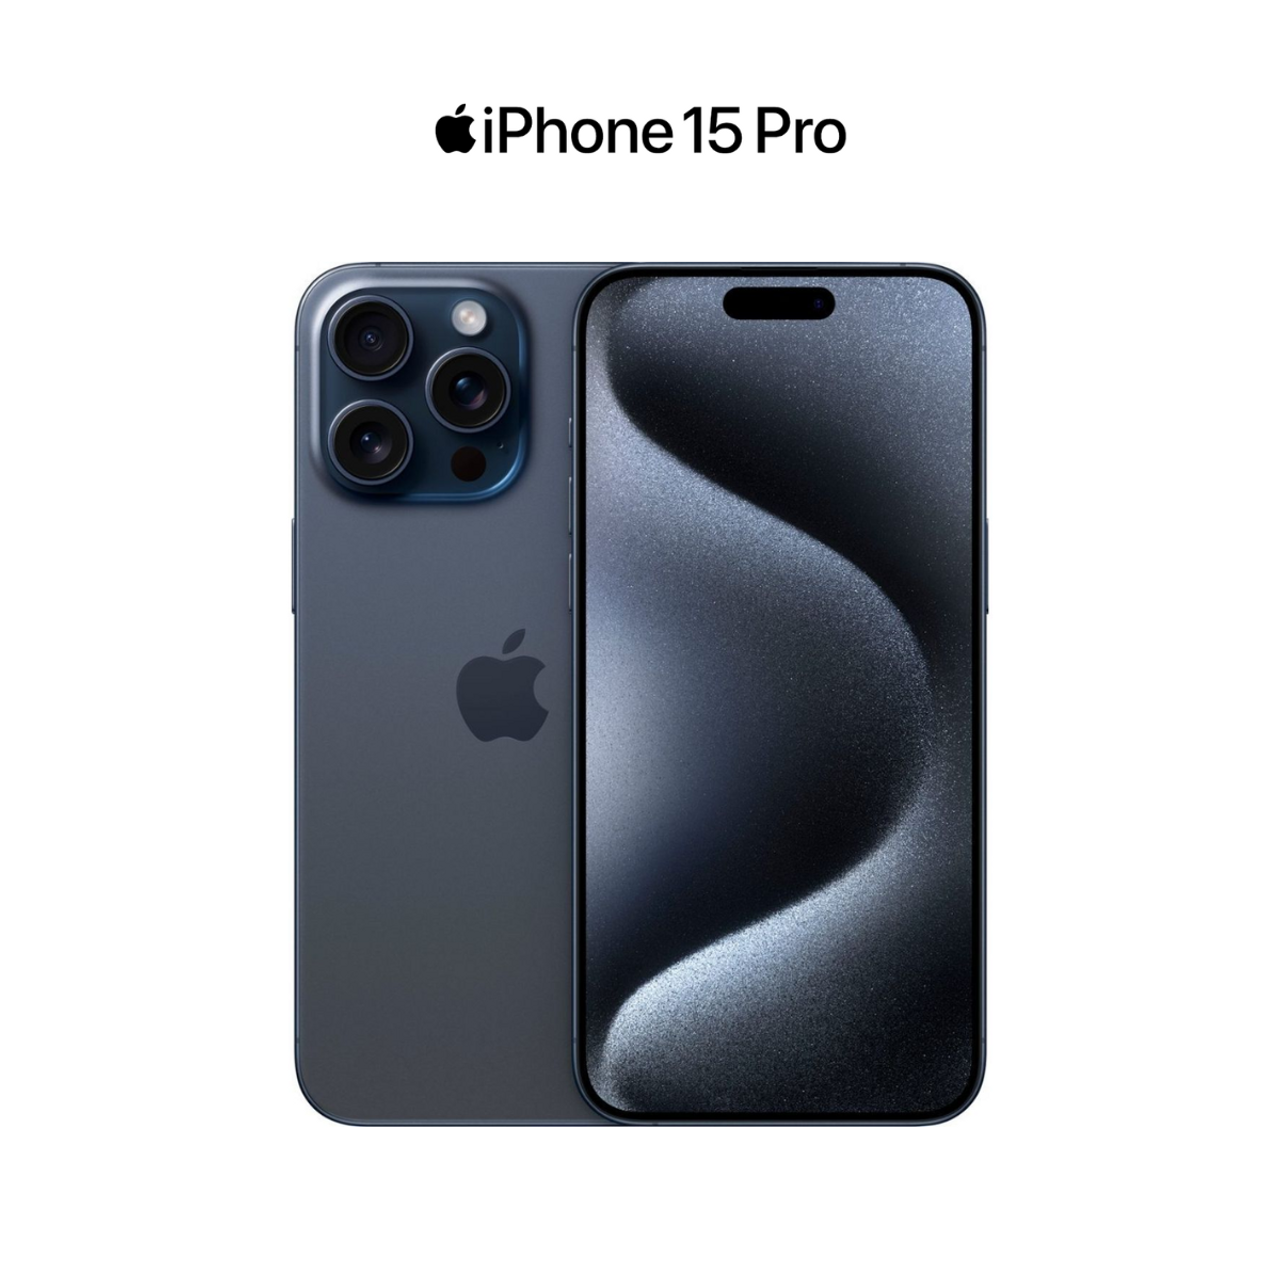 Apple iPhone 15 Pro product image